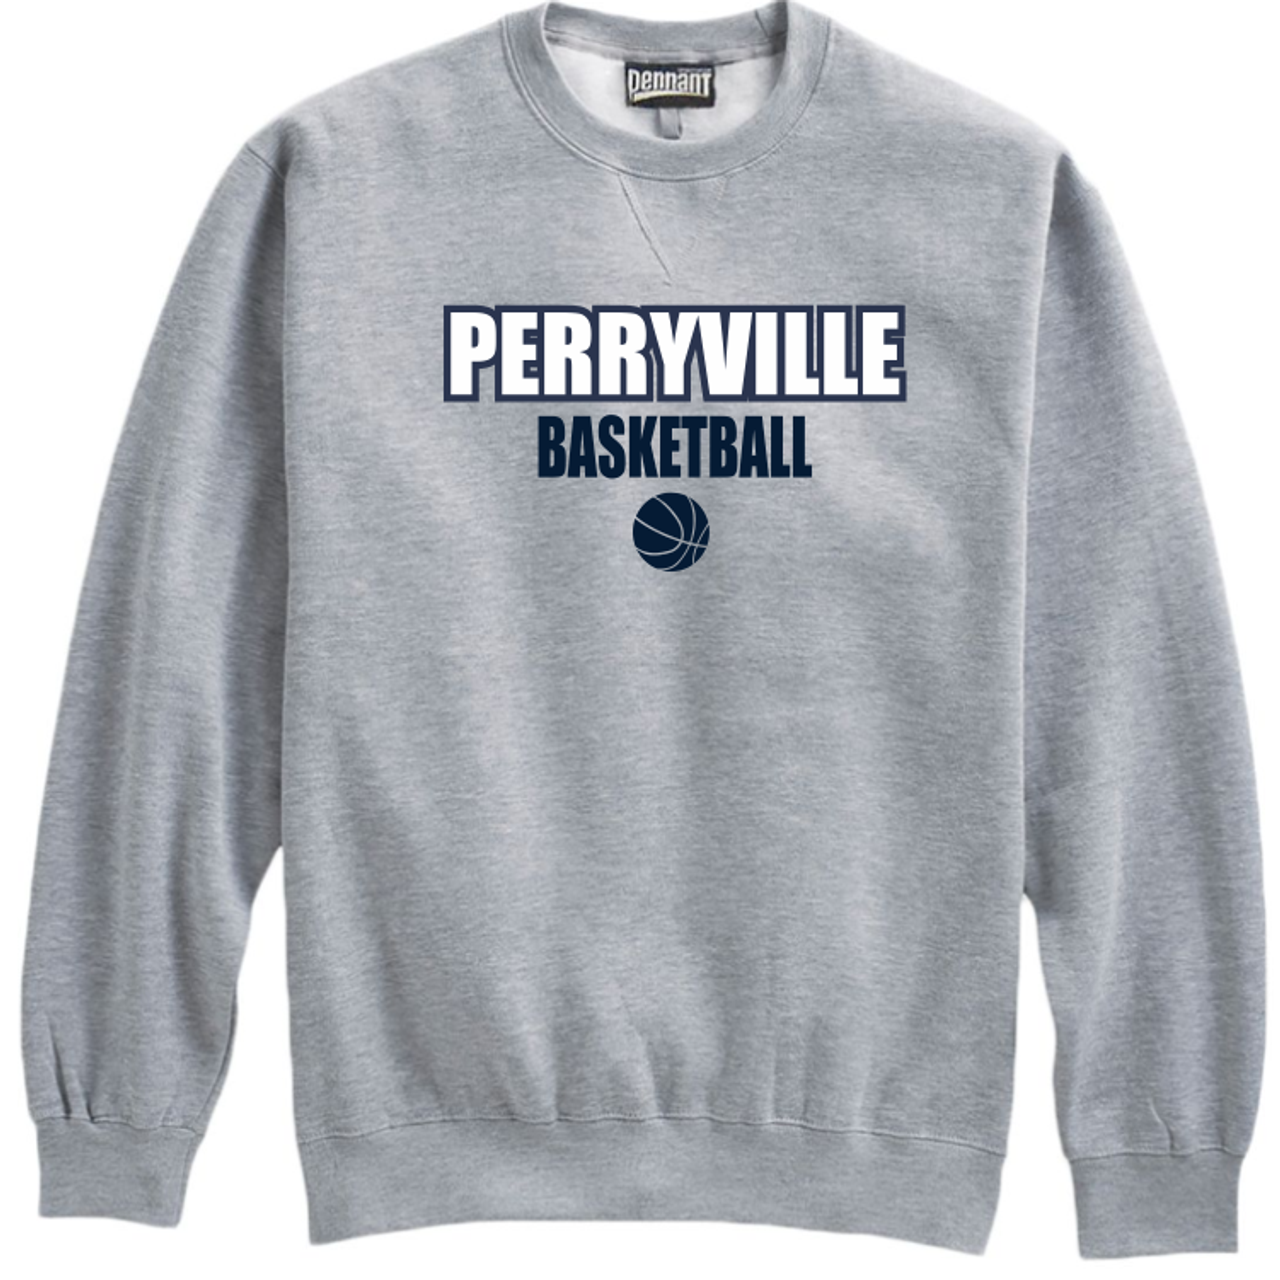 Perryville MS Basketball Crewneck Sweatshirt, Gray